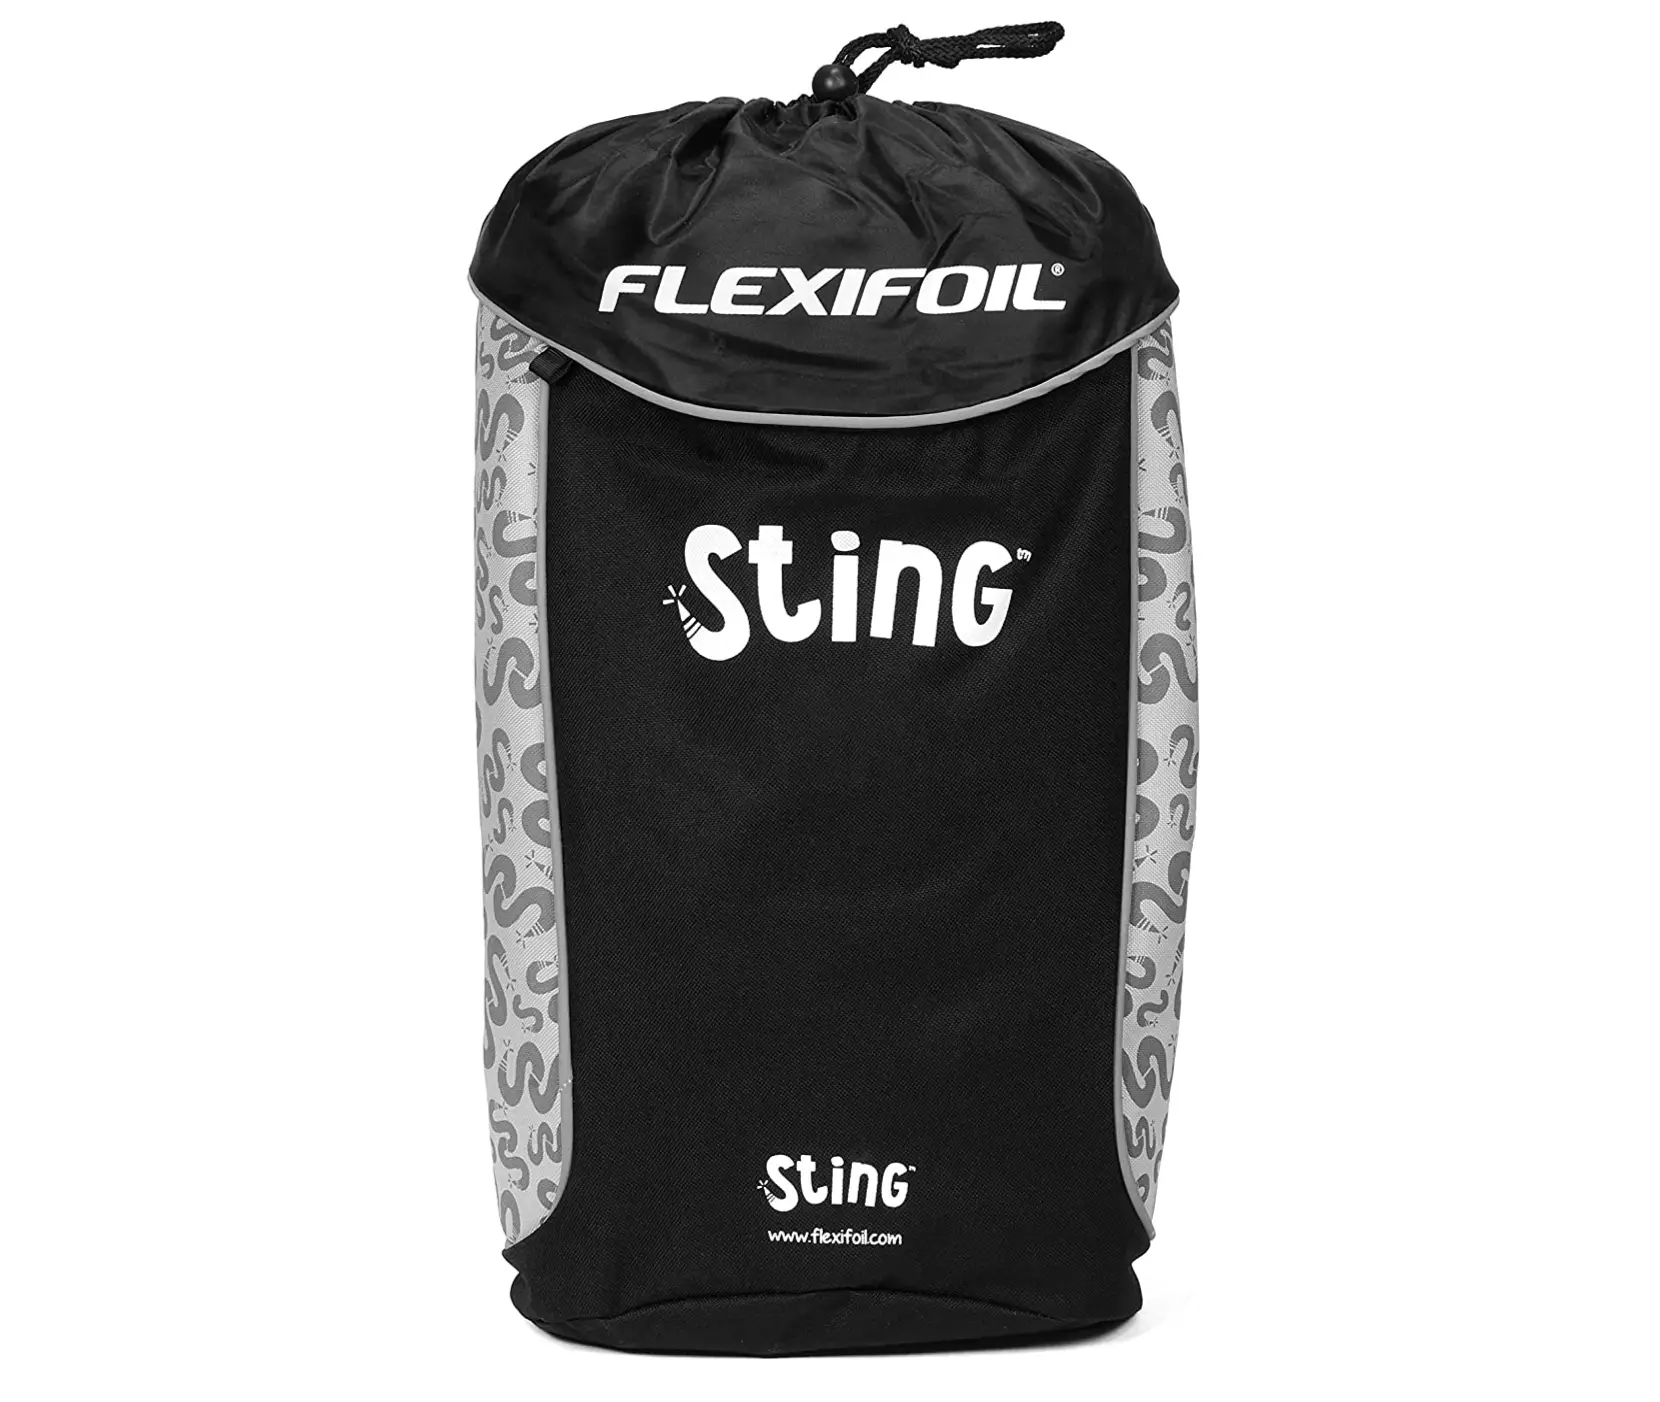 Flexifoil "Sting" Kite Bag